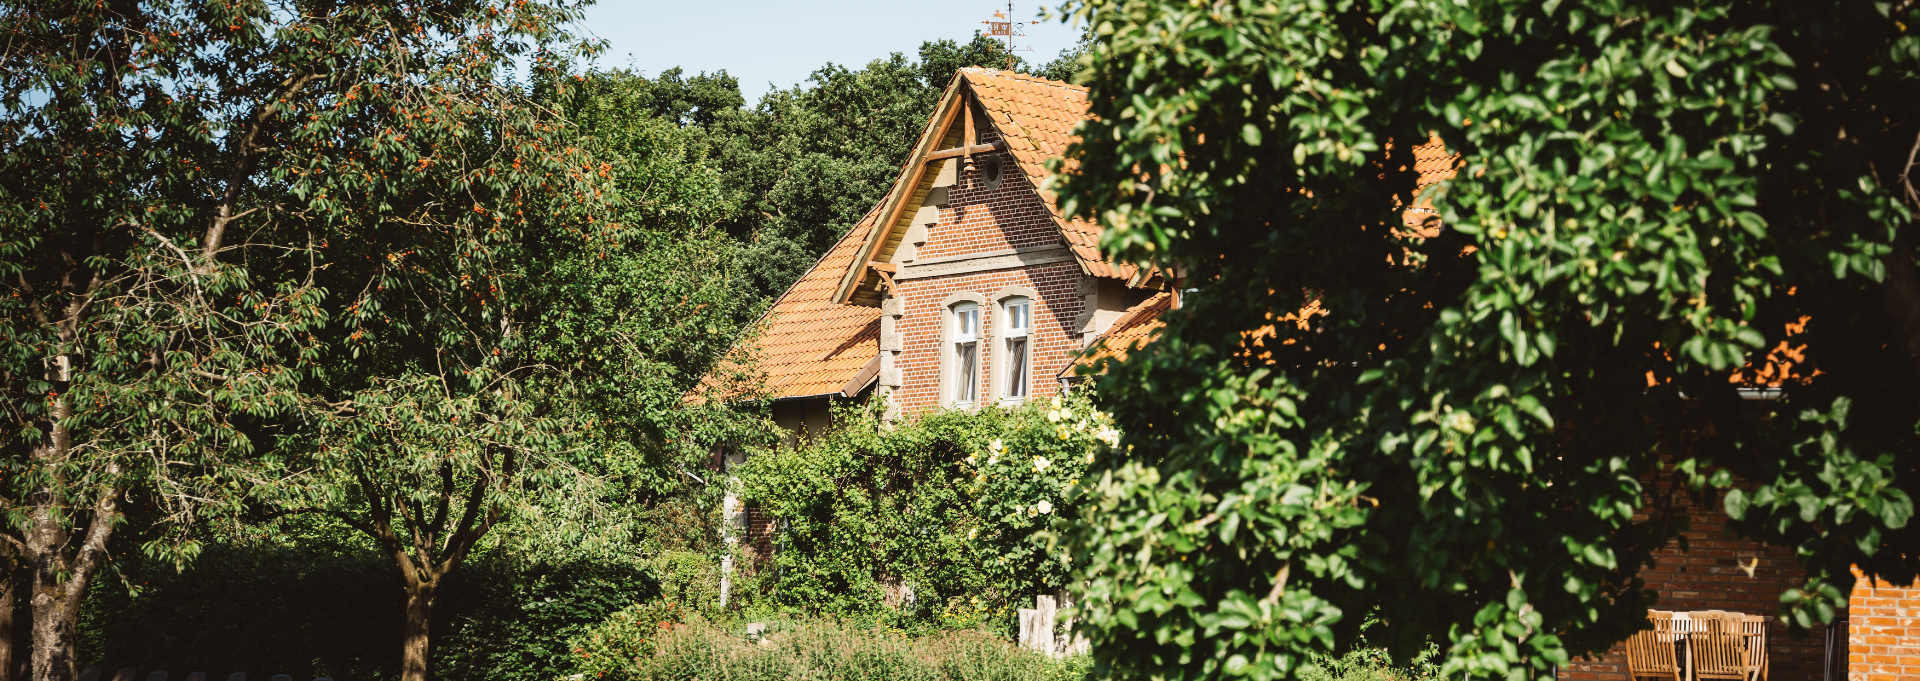 Aussenansicht des Landhaus Averbeck versteckt hinter grünen Baumkronen